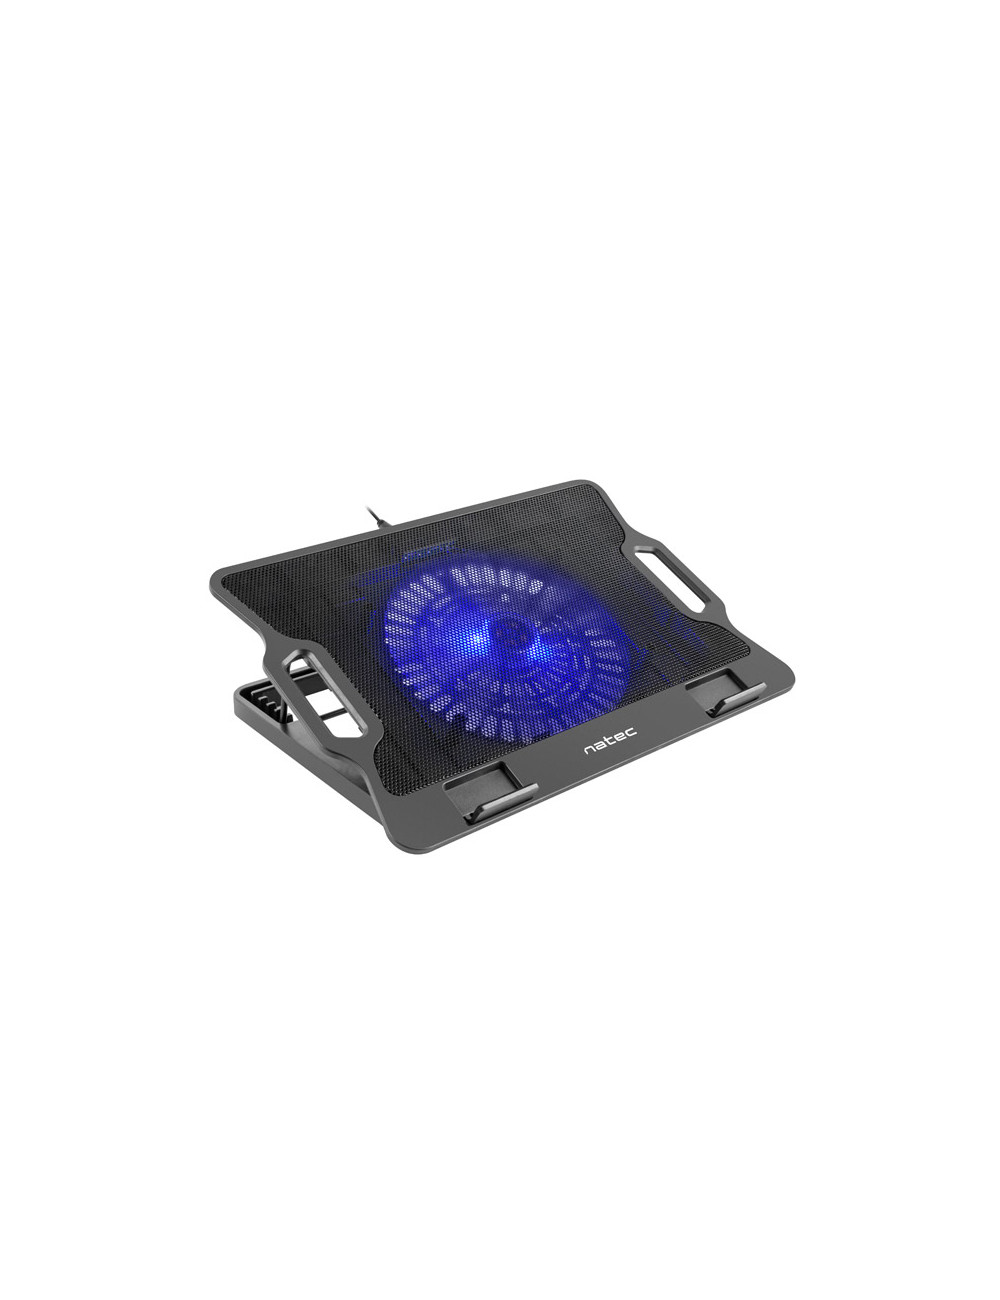 Natec Laptop cooling pad DIPPER 710 g, Black, 267 x 377 x 33 mm